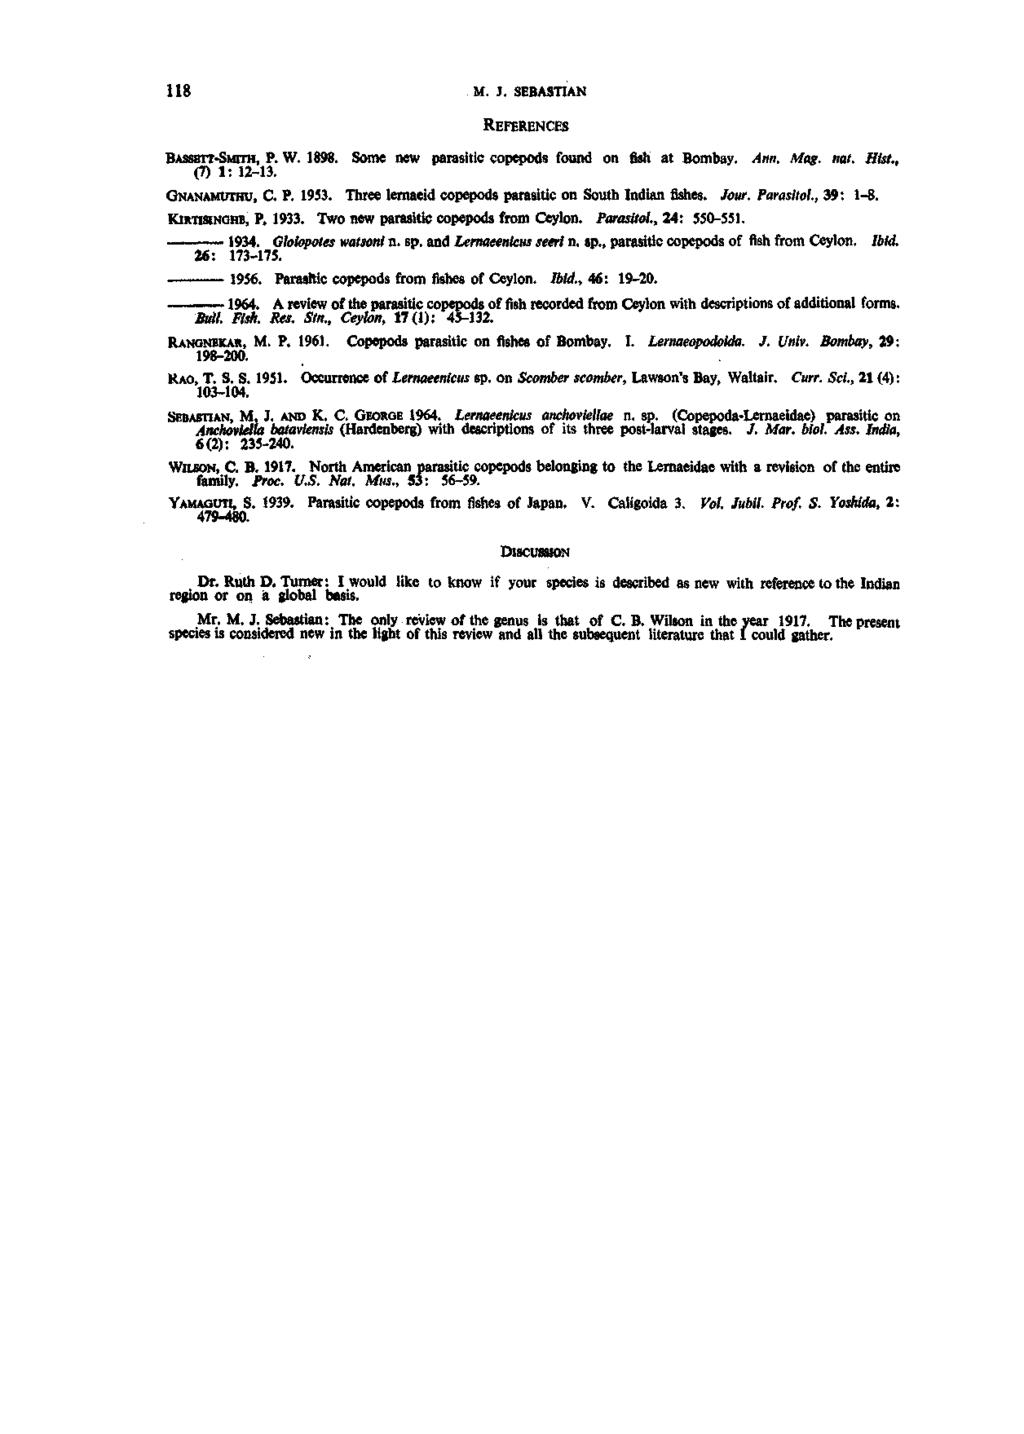 118 M. J. SEBASTIAN REFERENCES BASSETT-SMira, p. W. 1898. Some new parasitic copepods found on fish at Bombay. Am. Mag. nat. Hist., (7) 1: 12-13. GNANAMUTHU, C. P. 1953.